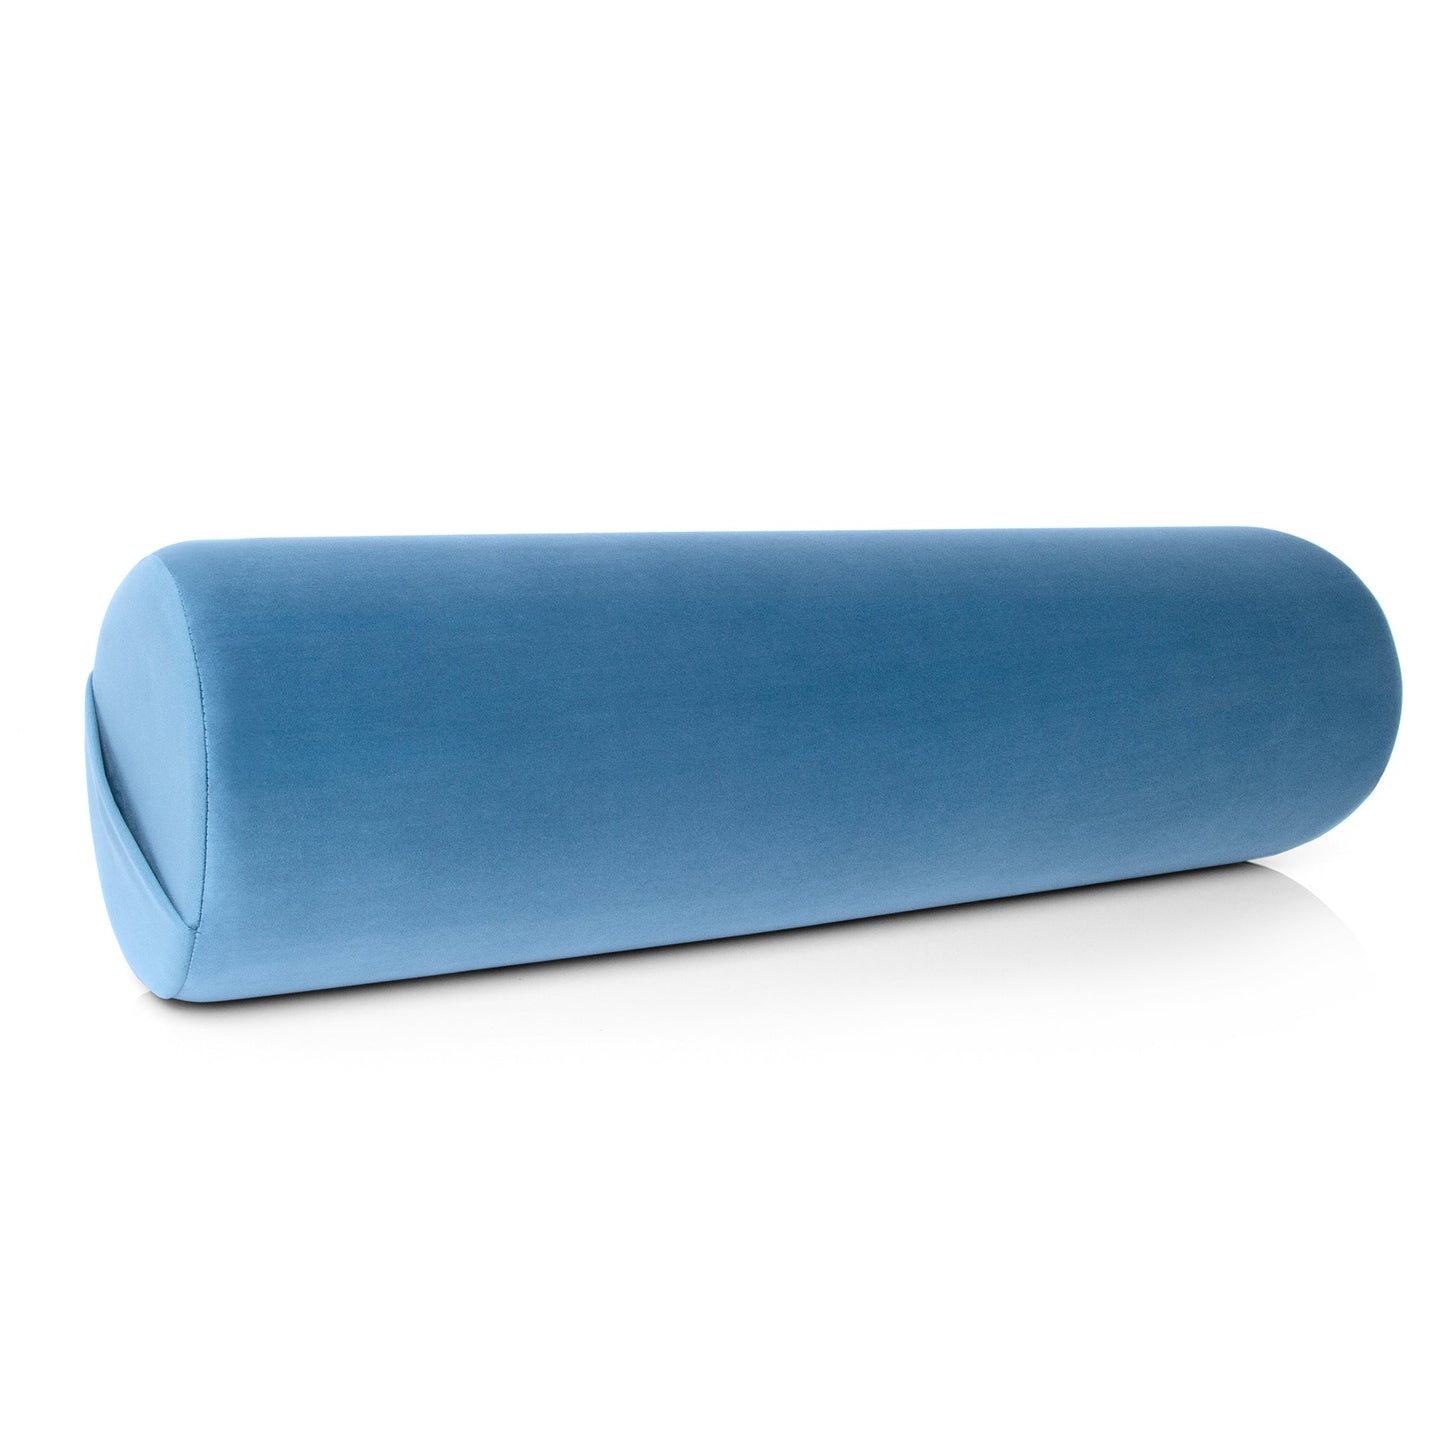 Liberator Decor Whirl Positioning Pillow Large Size Vel Blue Liberator Shapes